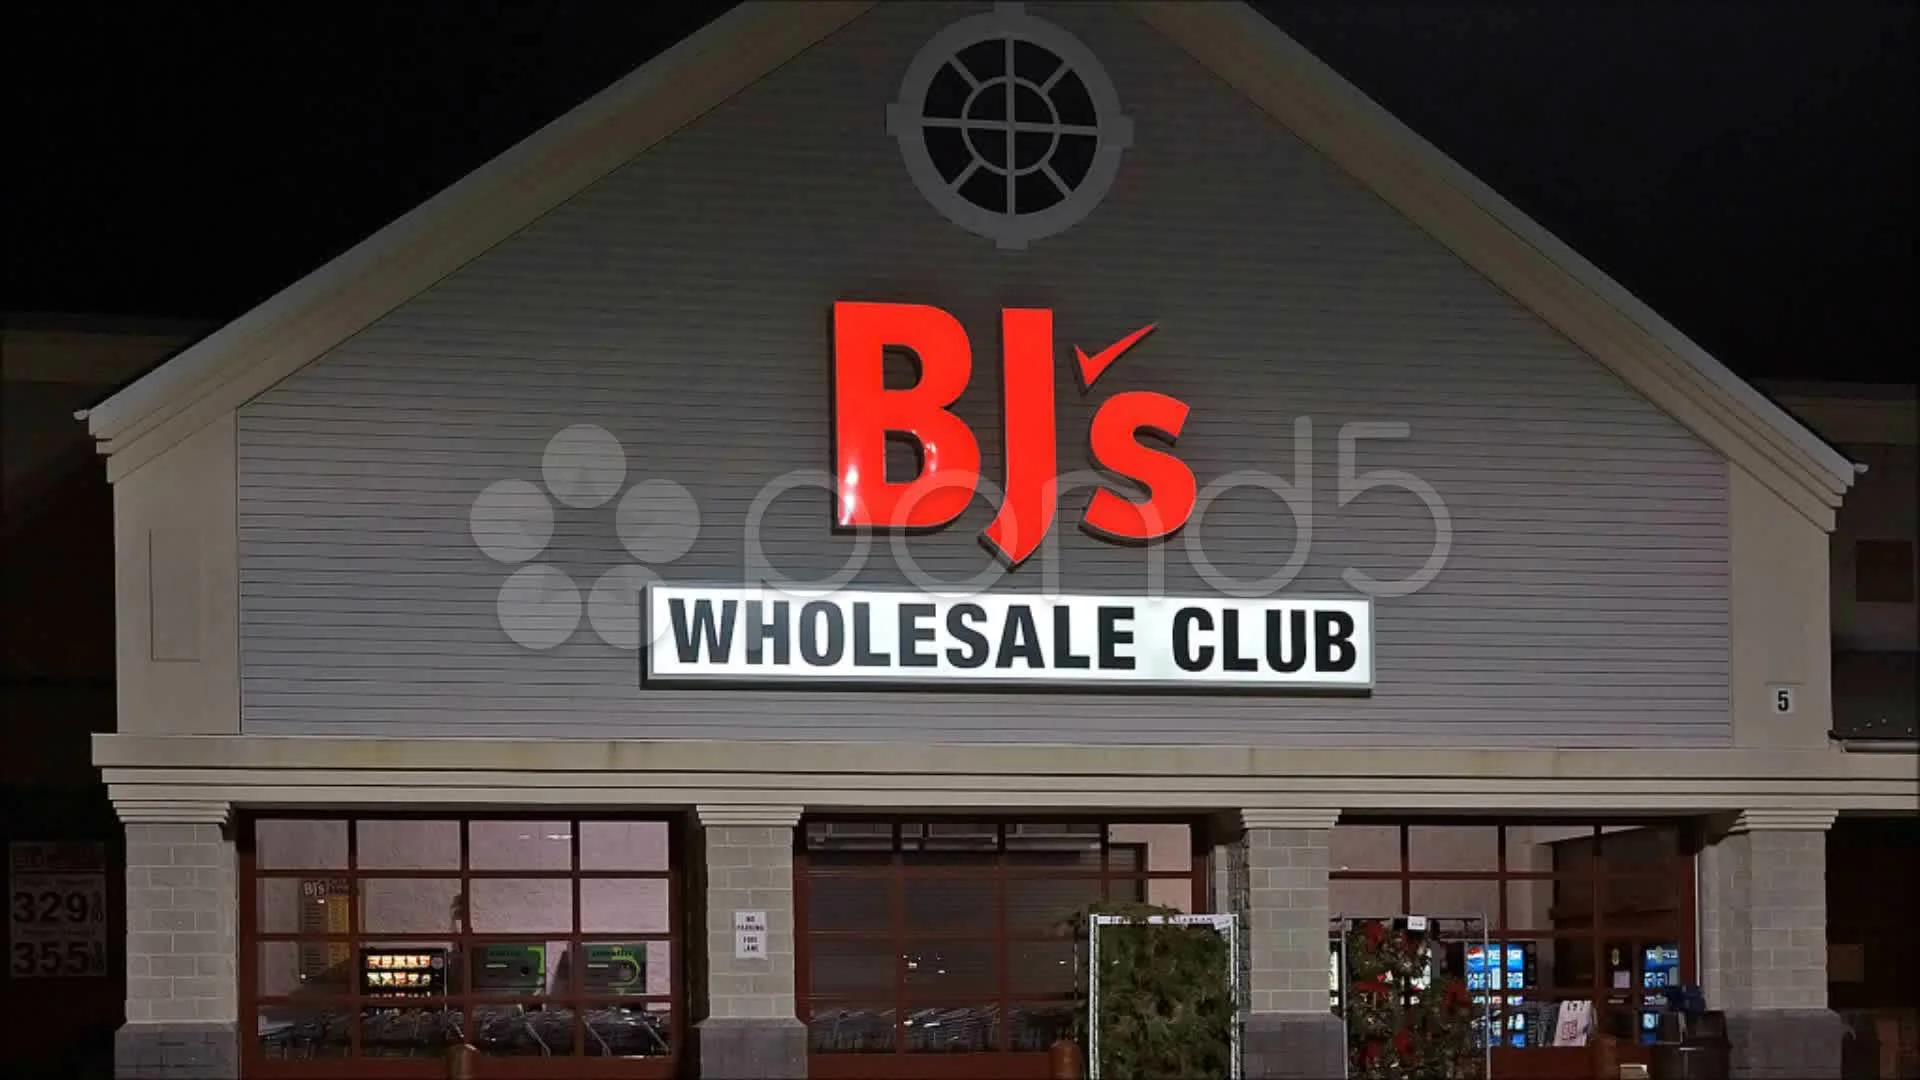 BJ's Wholesale Club (@bjswholesale) • Instagram photos and videos